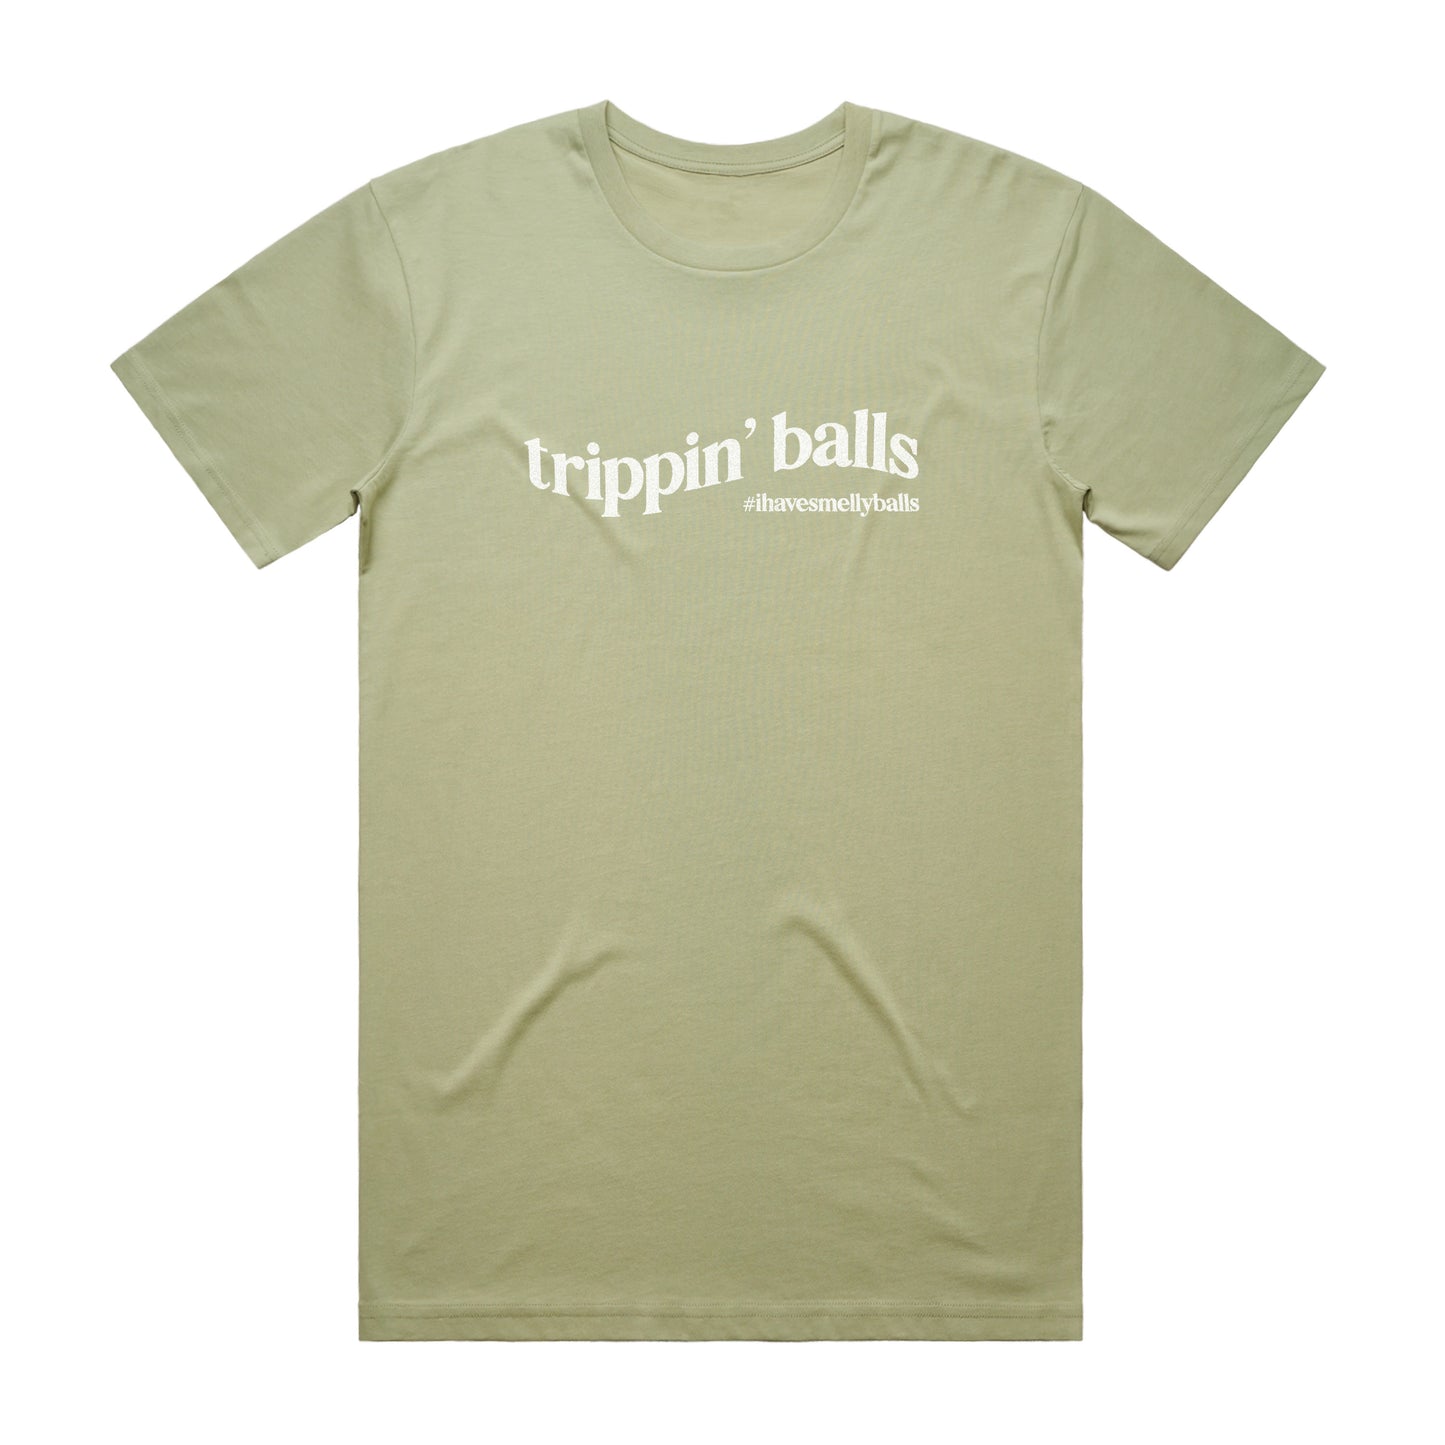 Unisex Trippin' Balls Tee - Eucalypt Green